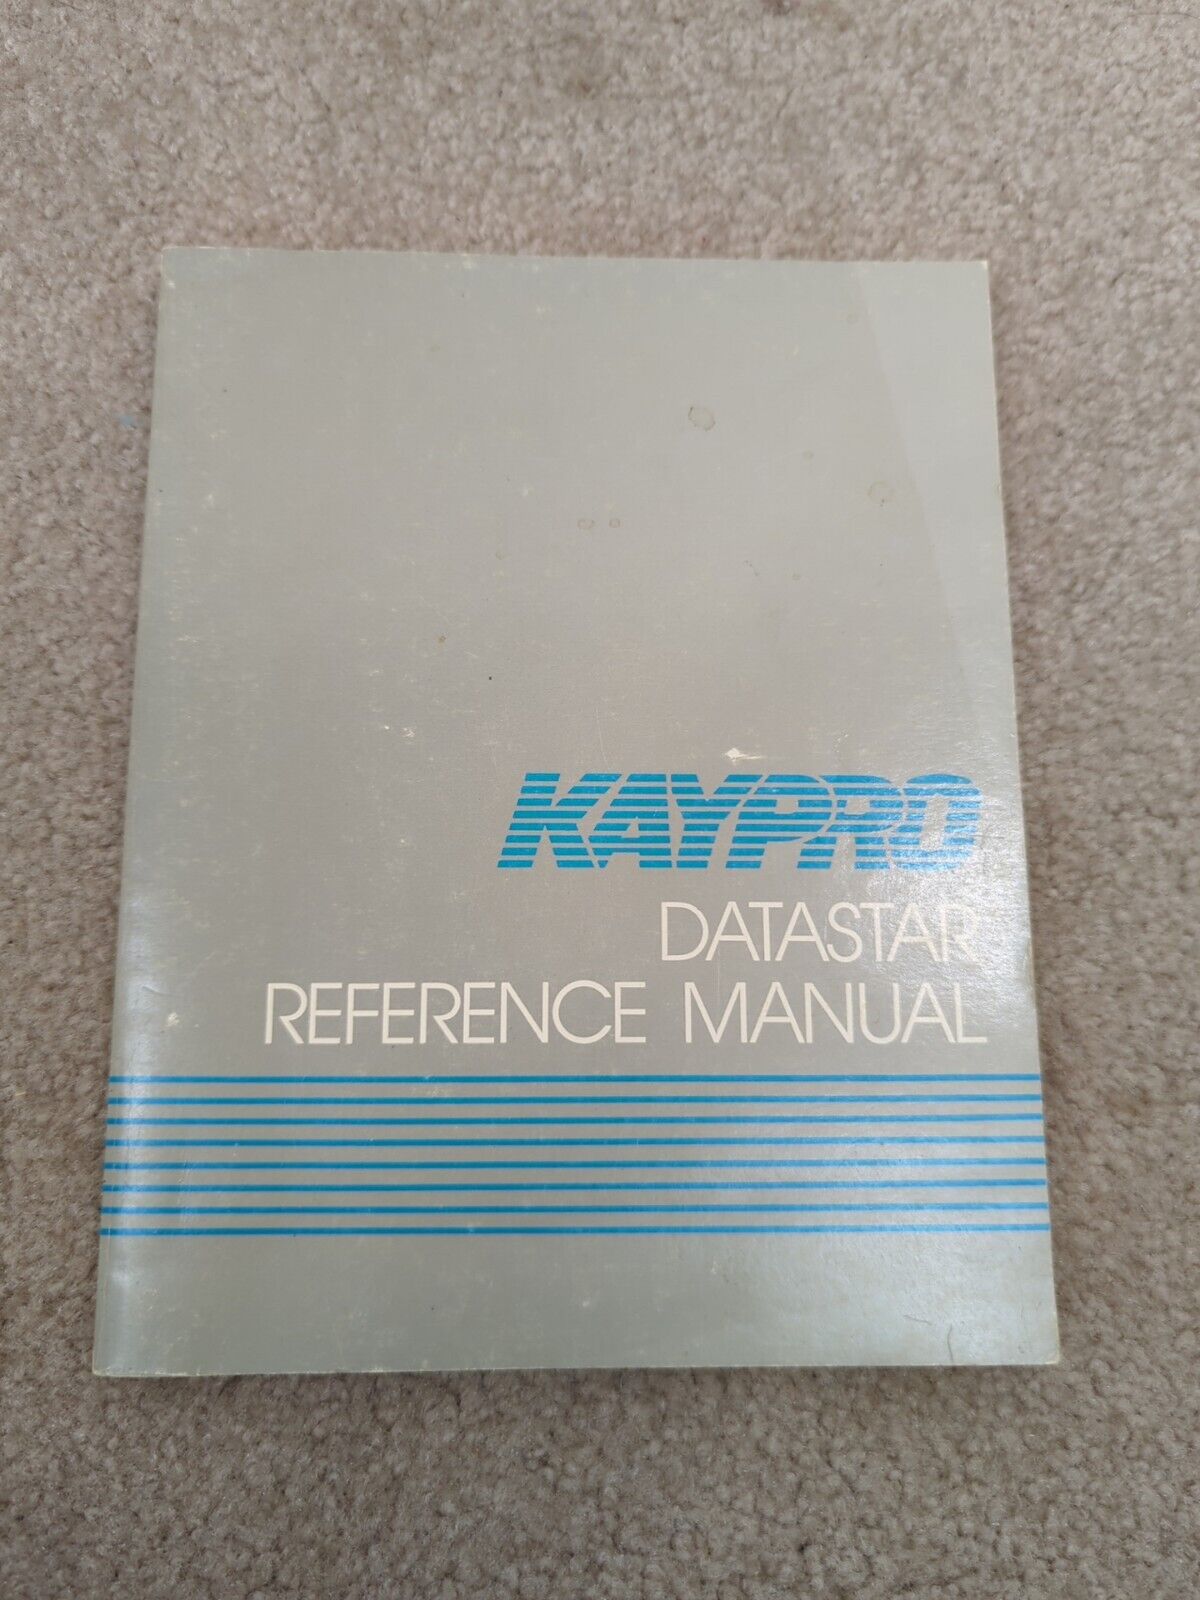 KAYPRO 10 Manual * ORIGINAL * DATASTAR Reference Manual EUC